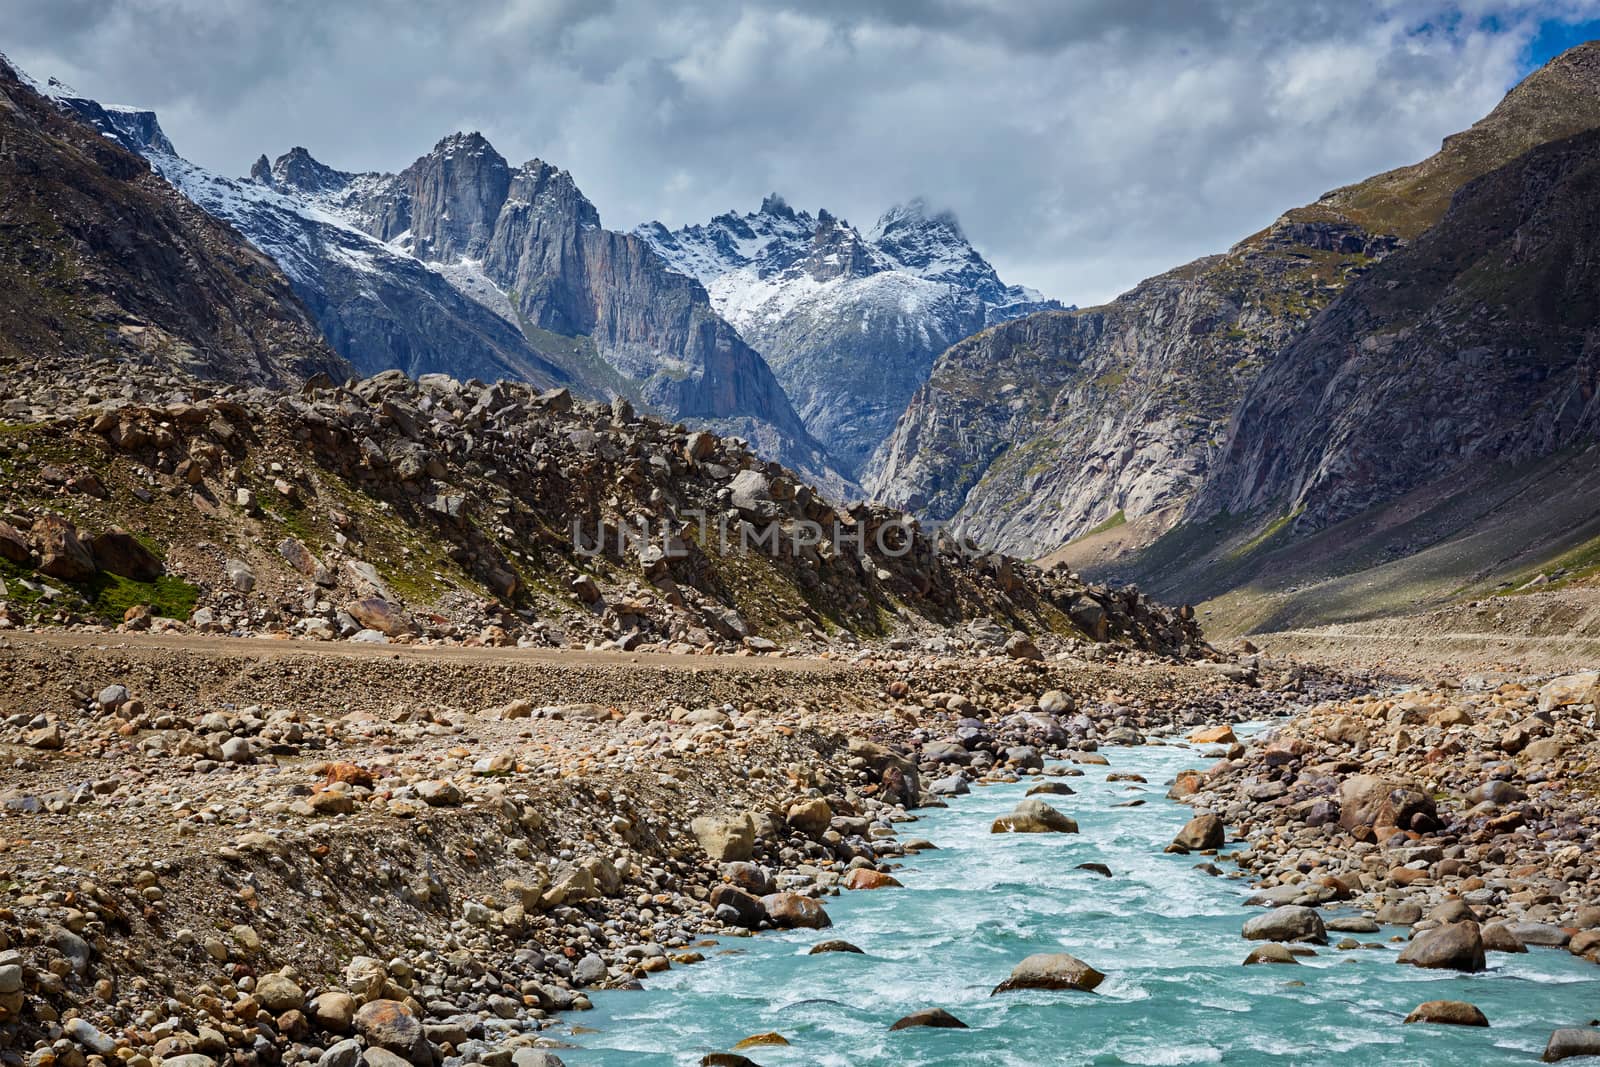 Chandra River in Lahaul Valley in Himalayas, Himachal Pradesh, India India